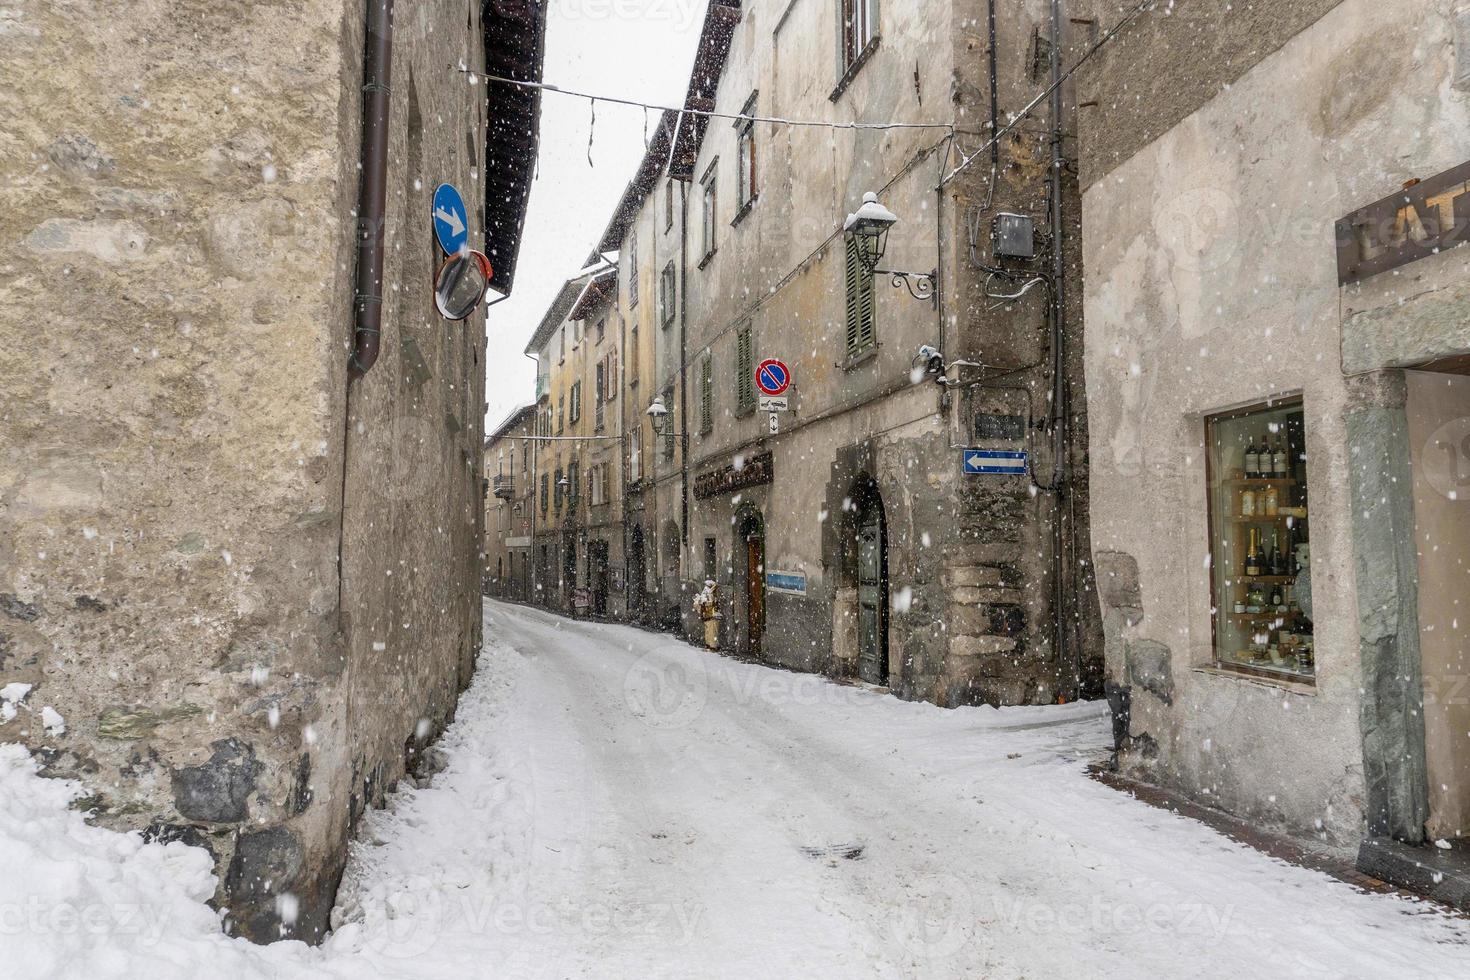 Bormio Medieval village Valtellina Italy under the snow in winter photo